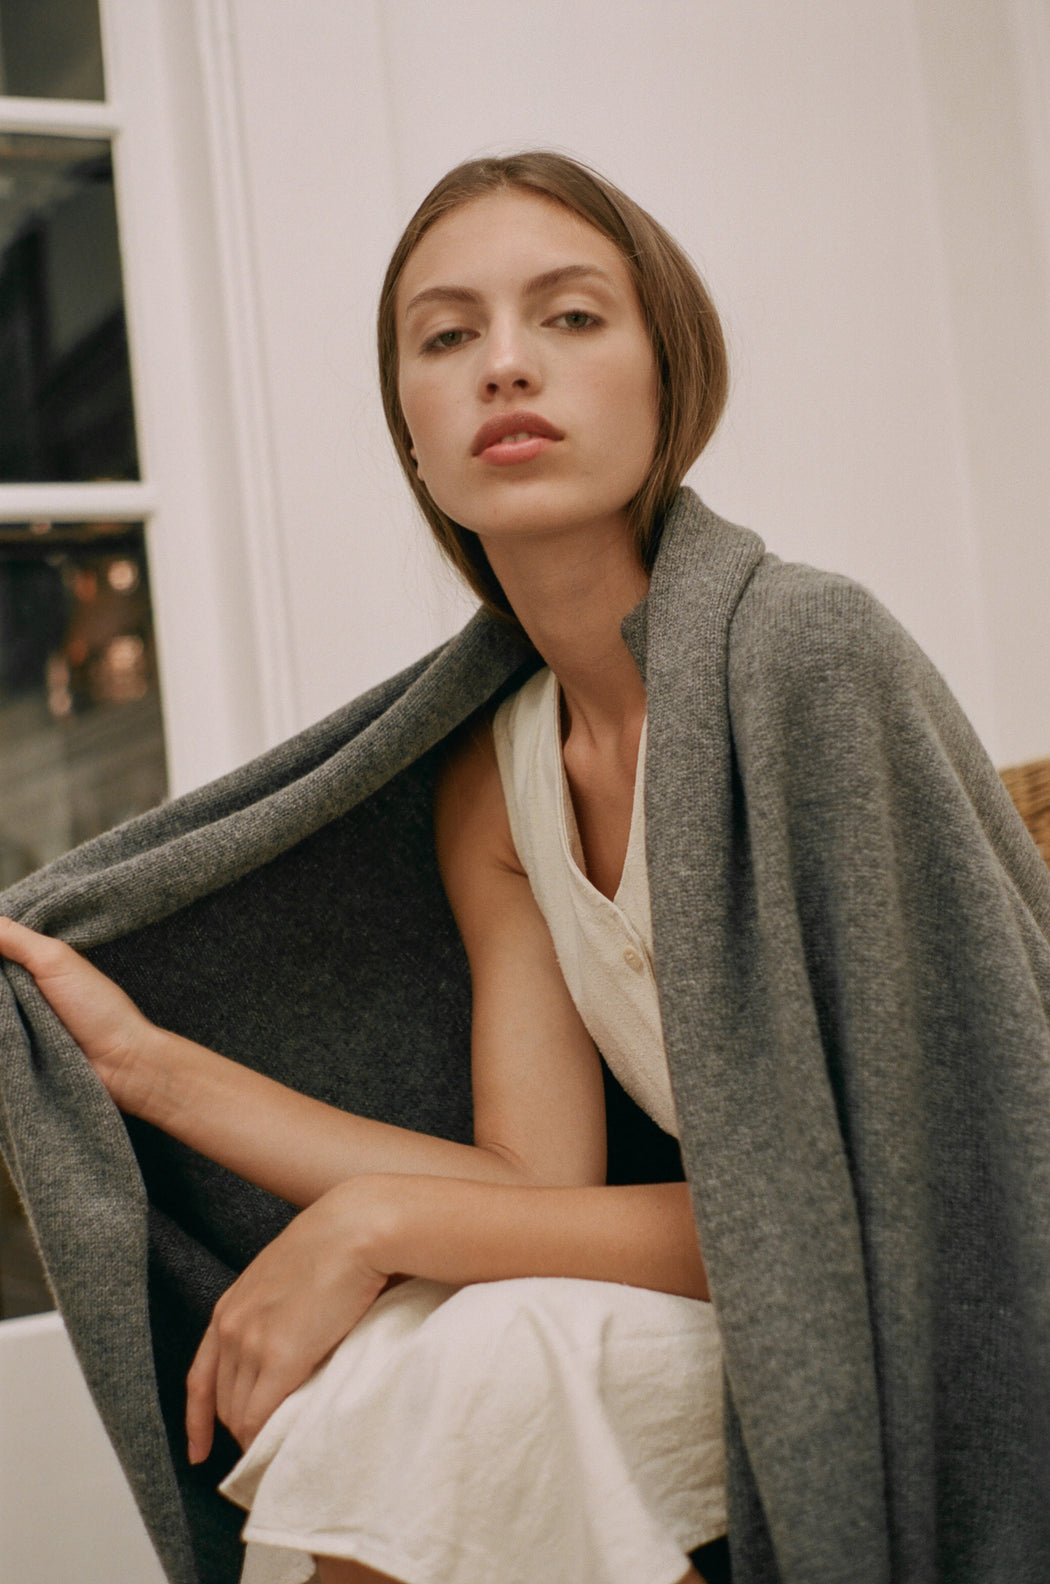 Oversized Italian Cashmere Jersey Knit Blanket - Charcoal